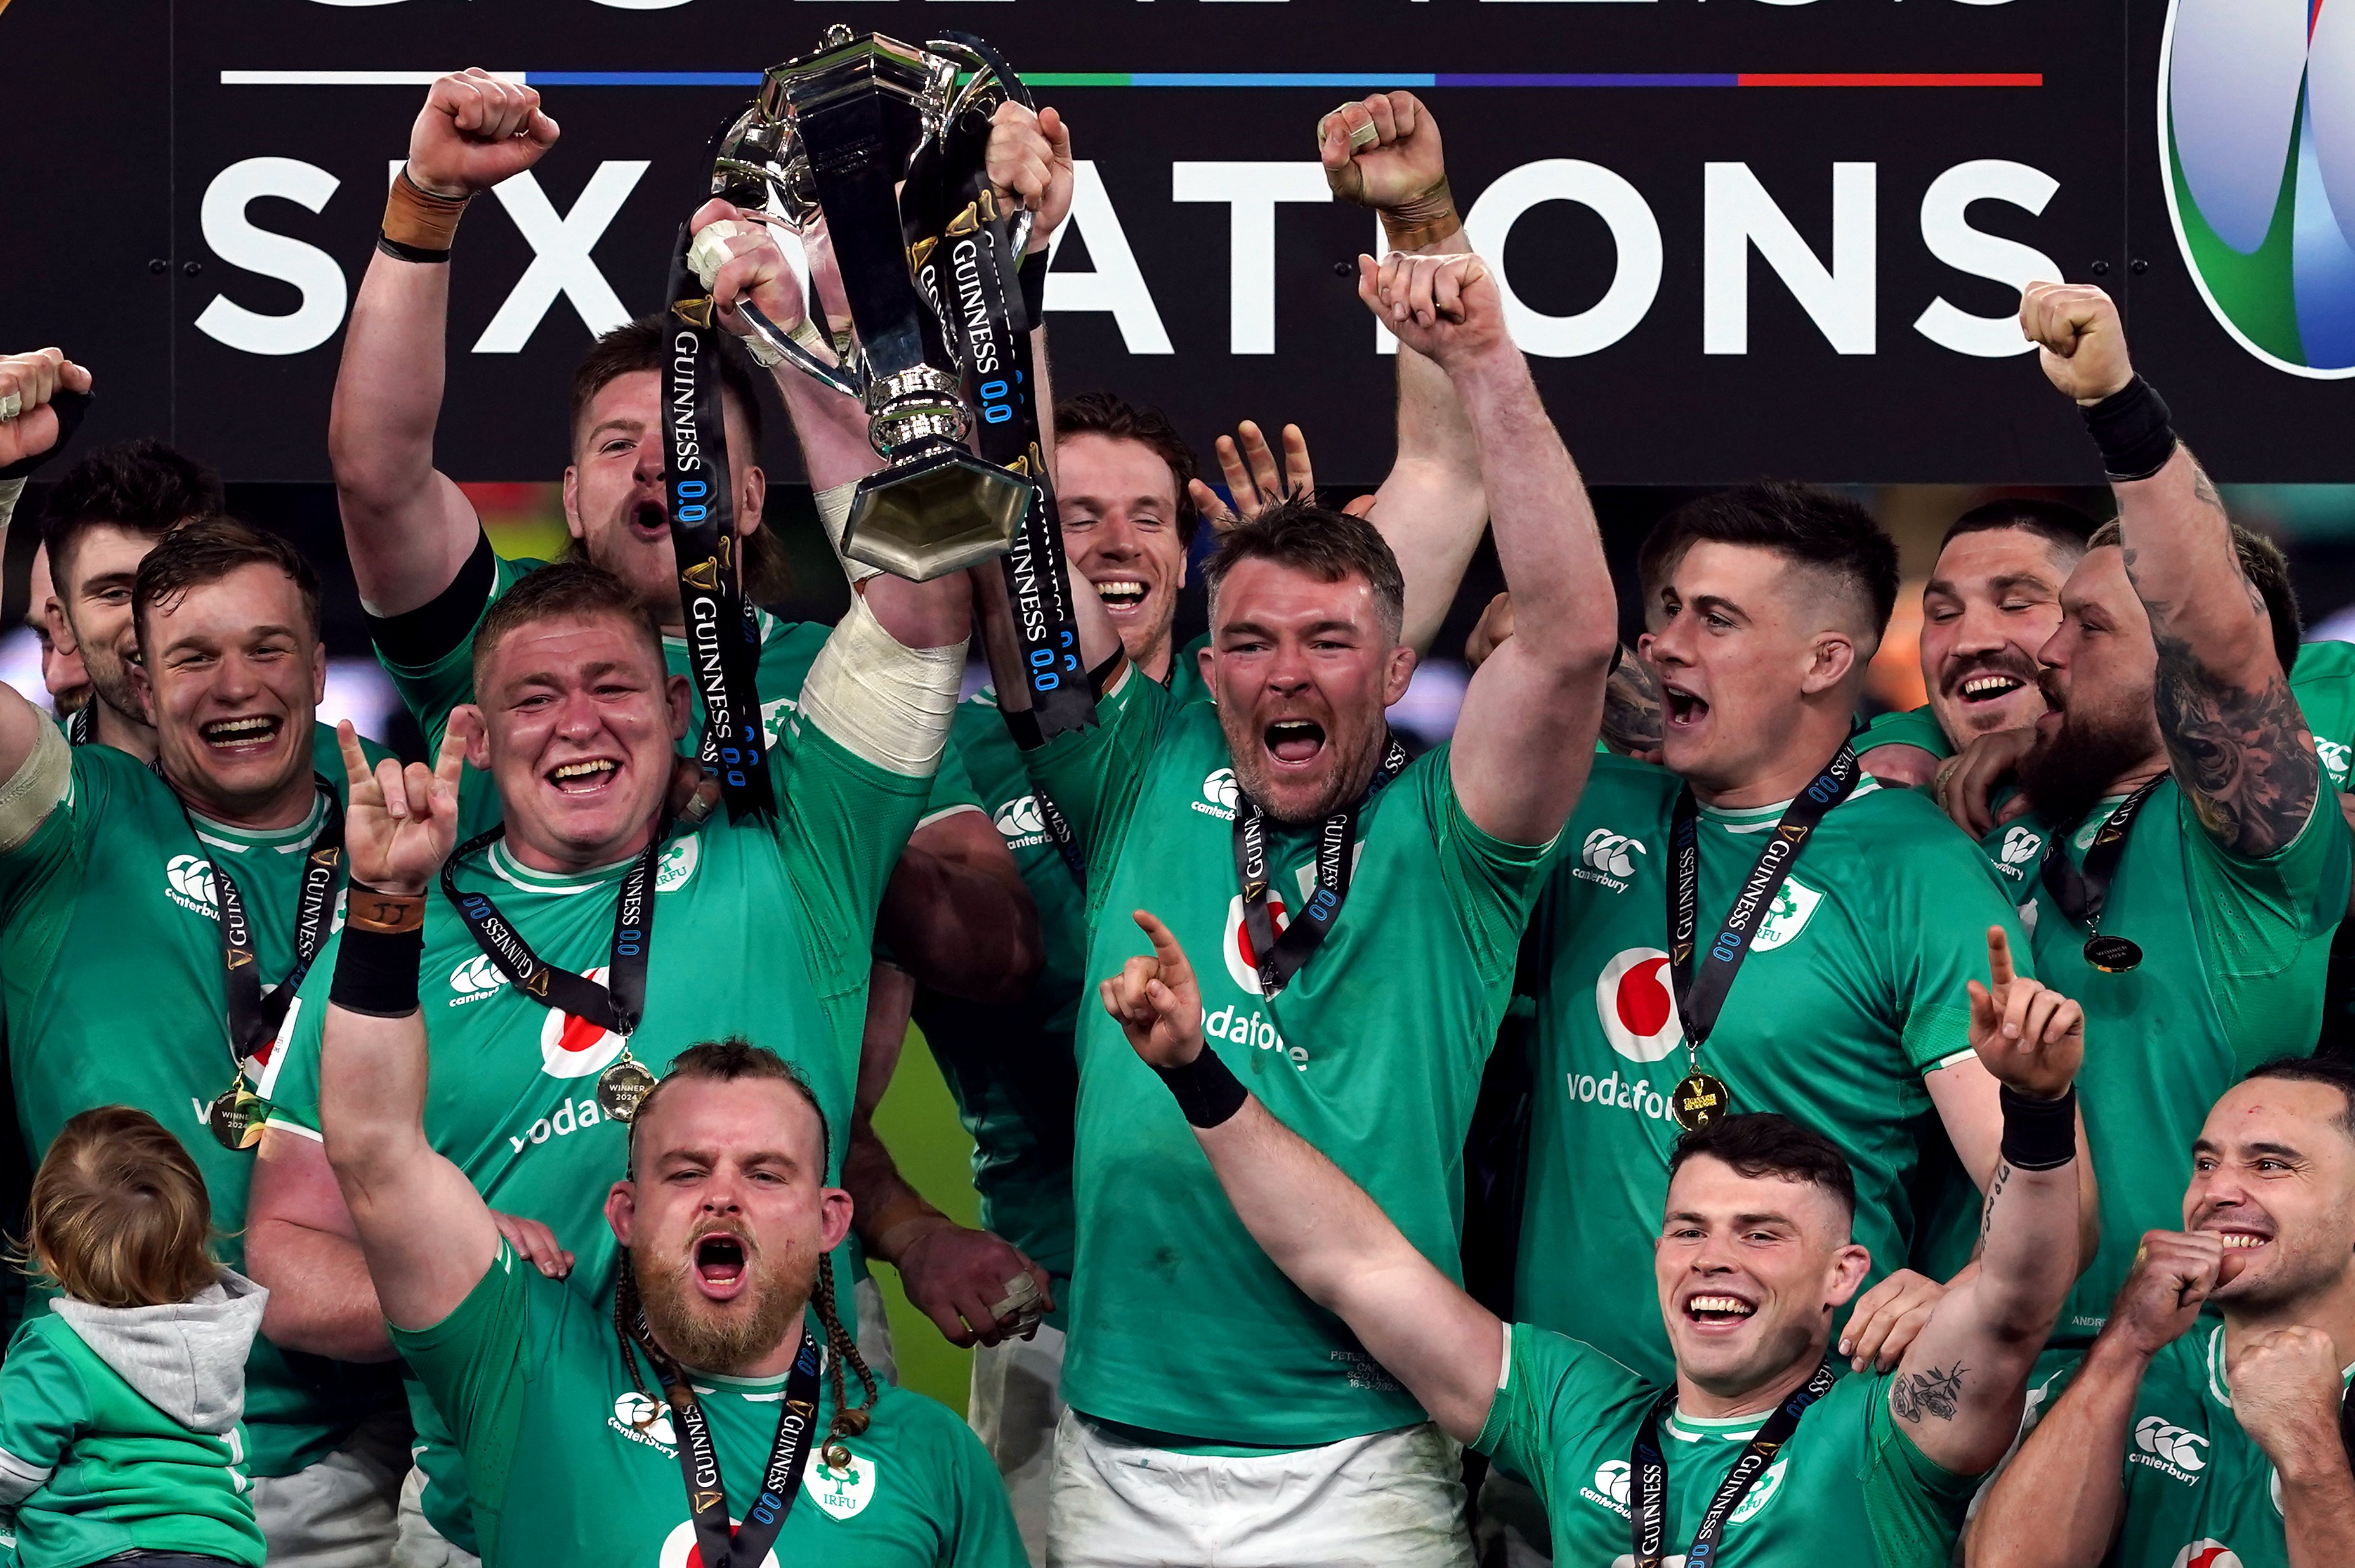 Ireland celebrated back-to-back Six Nations titles